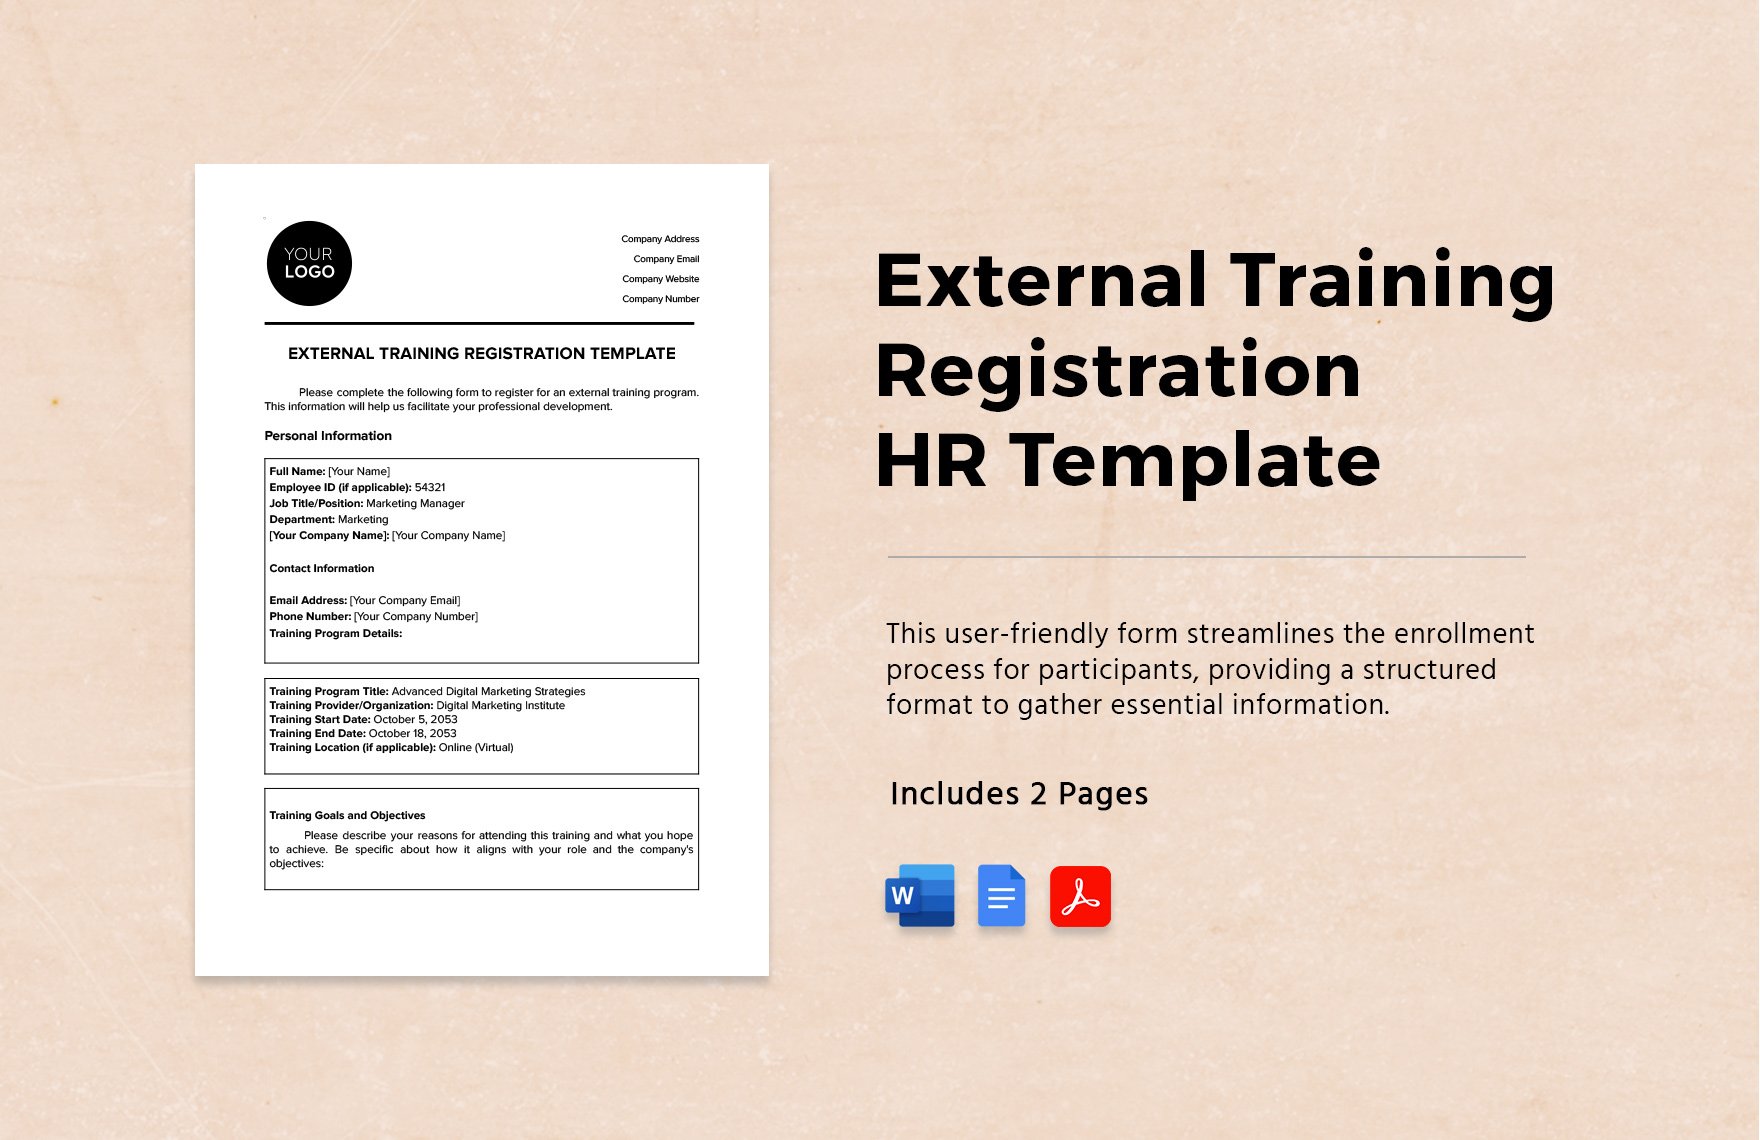 External Training Registration HR Template in Word, Google Docs, PDF